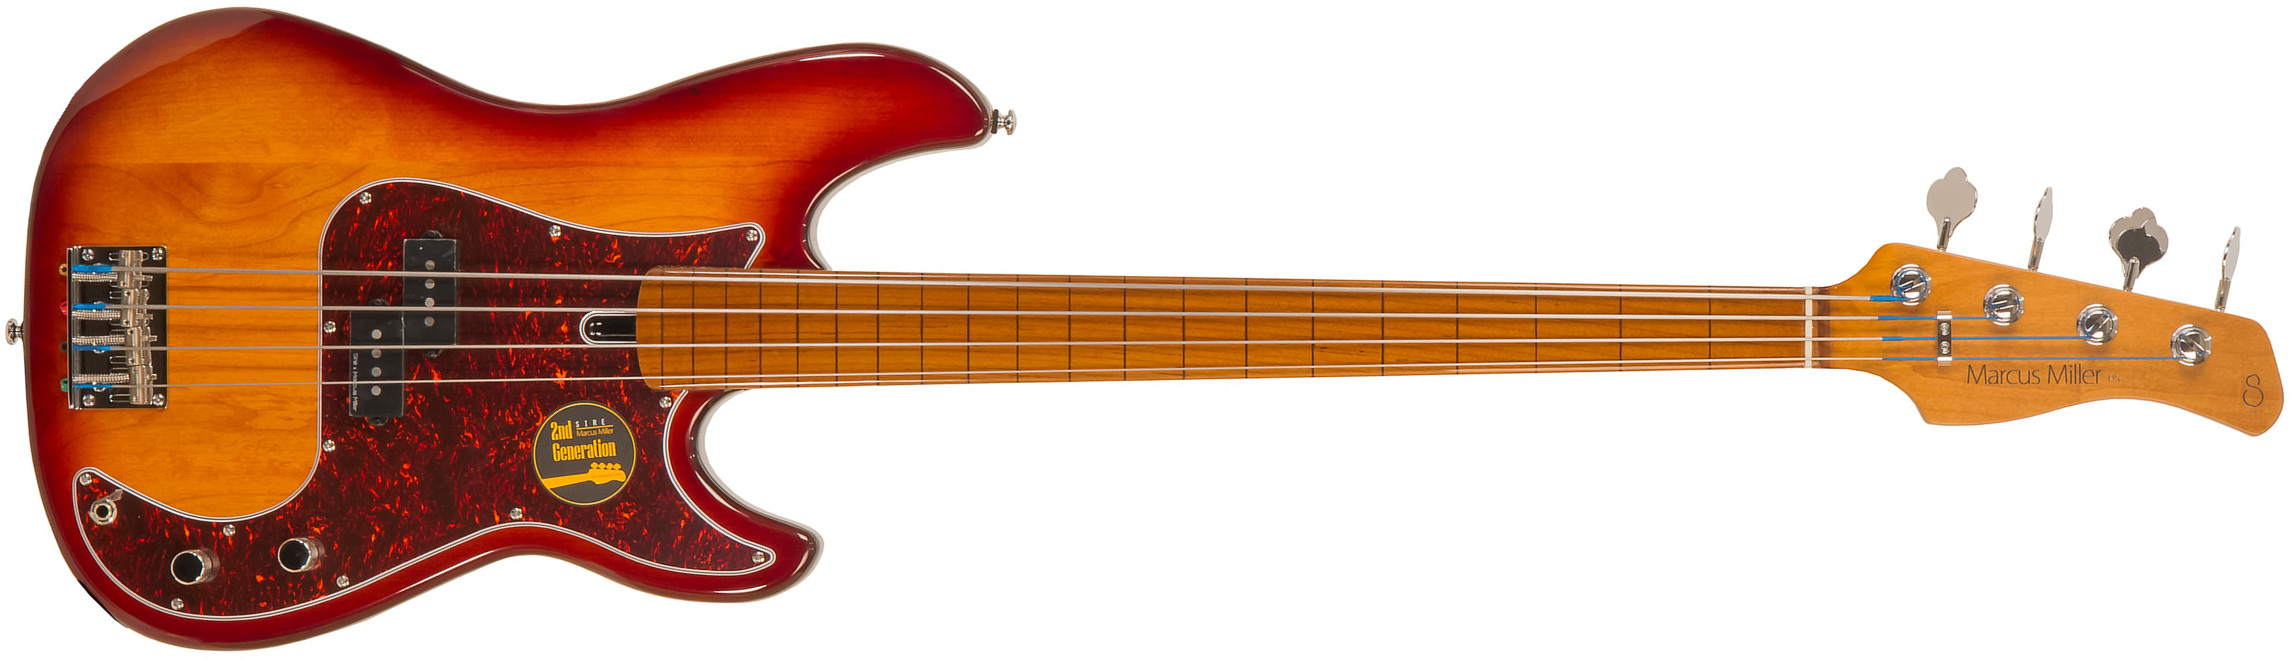 Marcus Miller P5 Alder 4st Fretless Mn - Tobacco Sunburst - Solid body electric bass - Main picture